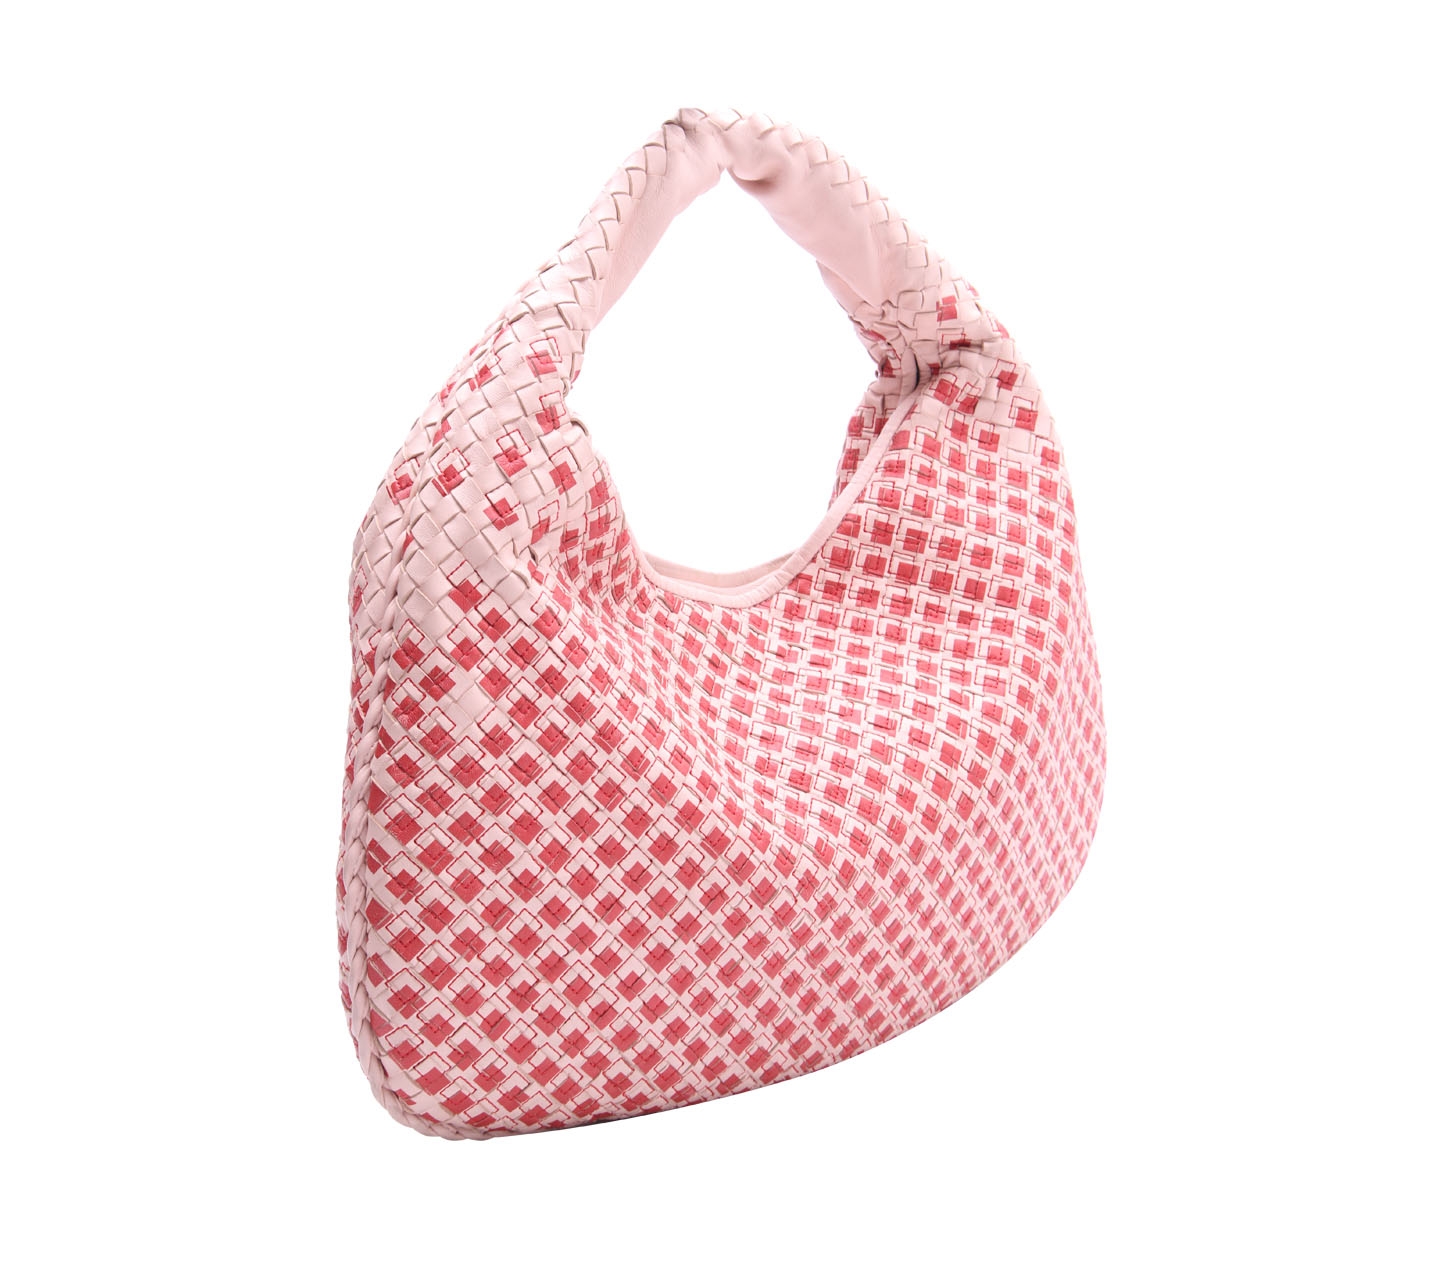 Bottega Veneta Hobo Maxi Intrecciato Nappa Soft Pink Leather Shoulder Bag